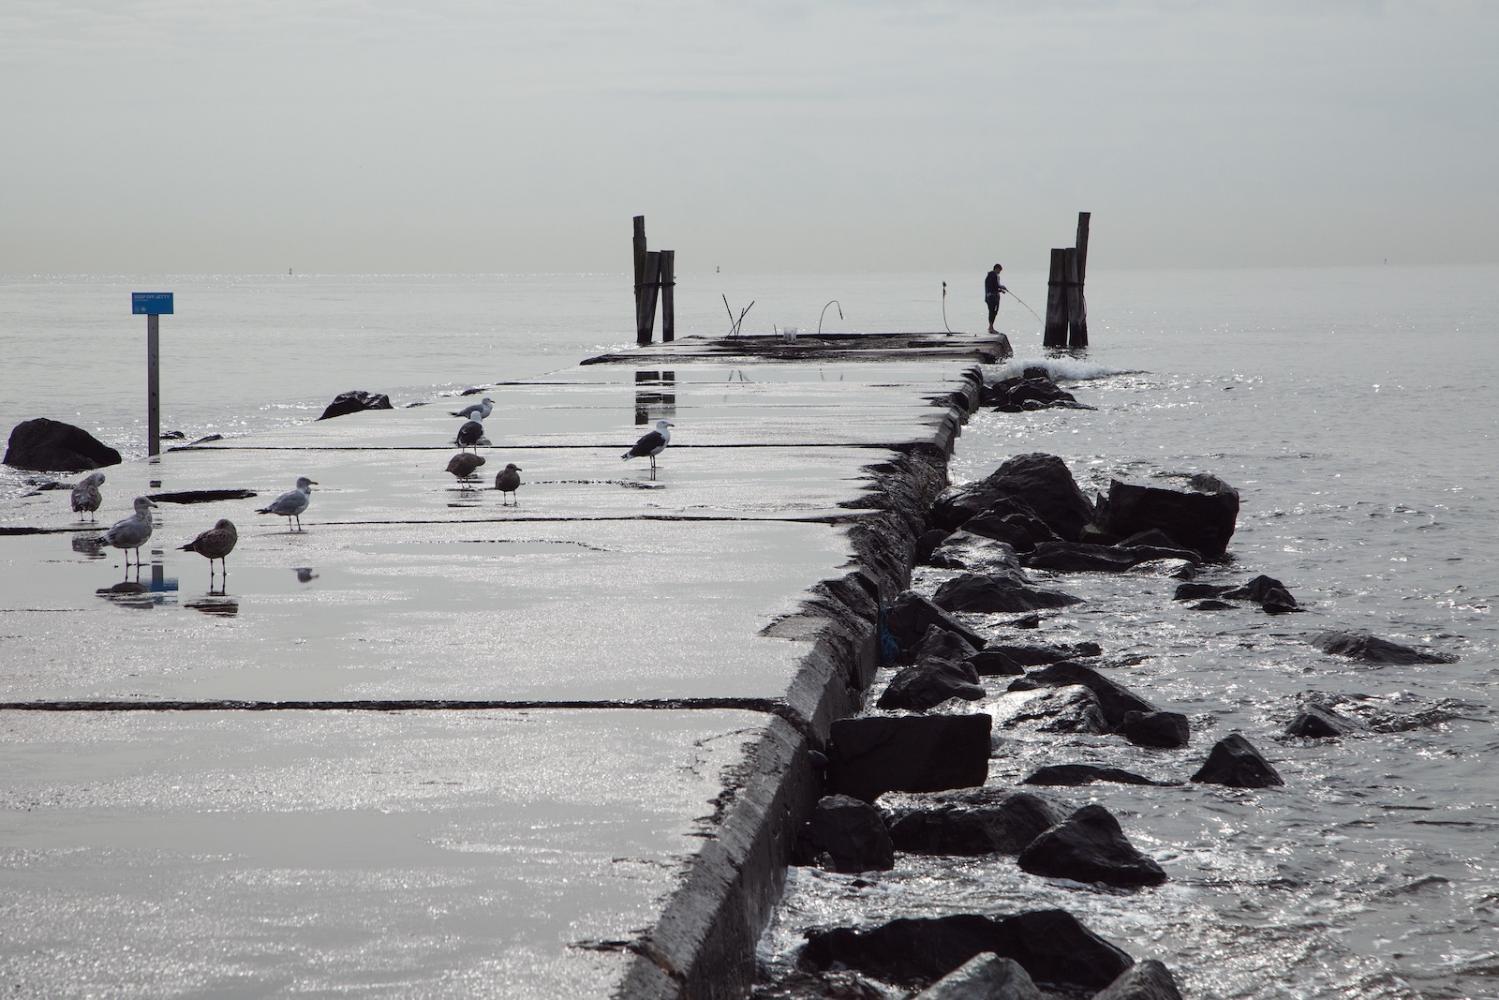 Fisherman and seagulls at rocky...Beach, Staten Island, NY 10305.